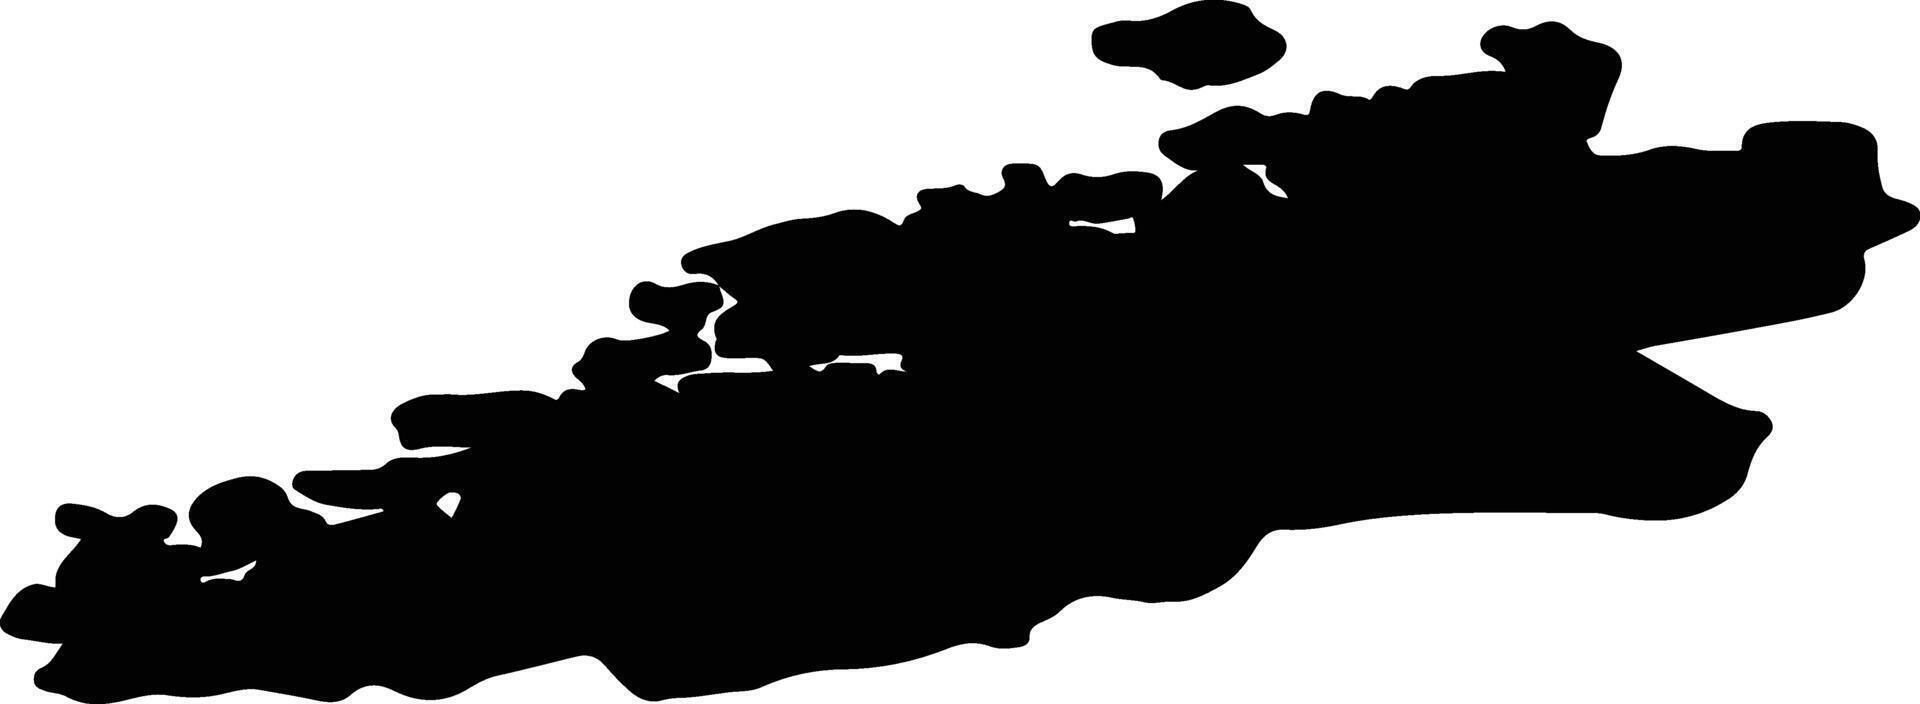 More og Romsdal Norway silhouette map vector